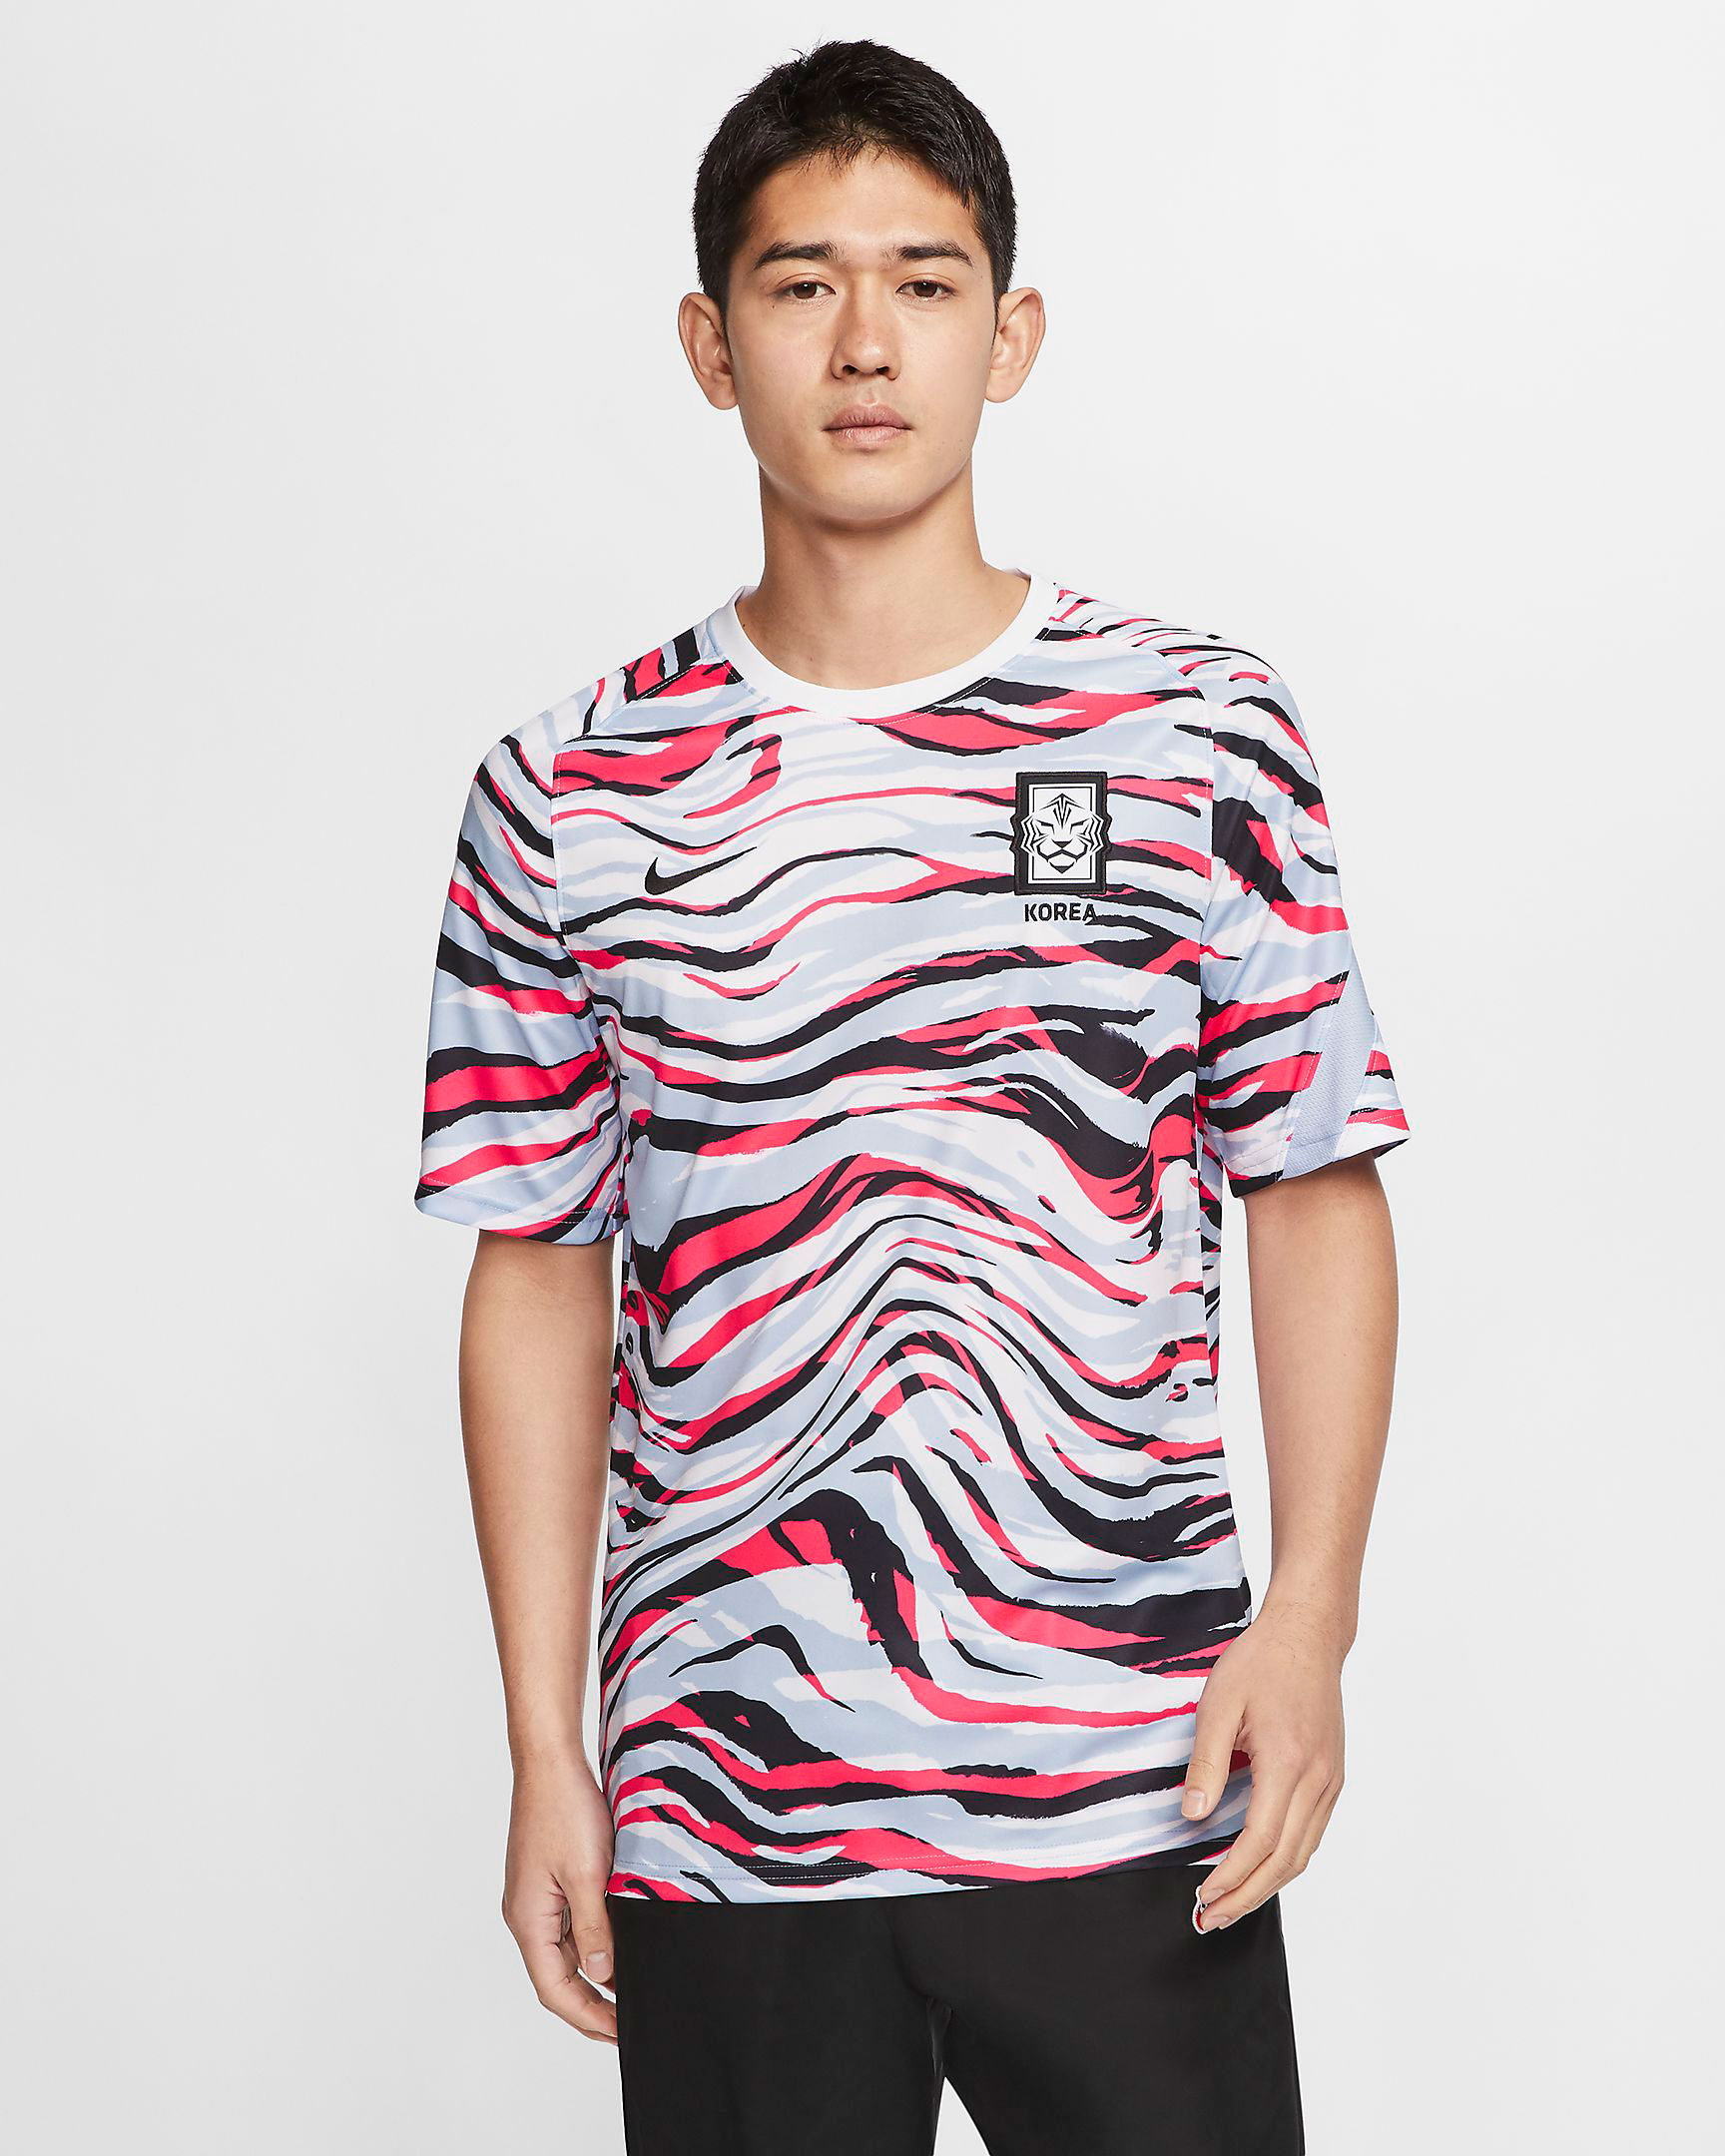 nike-korea-soccer-top-jersey-shirt-1